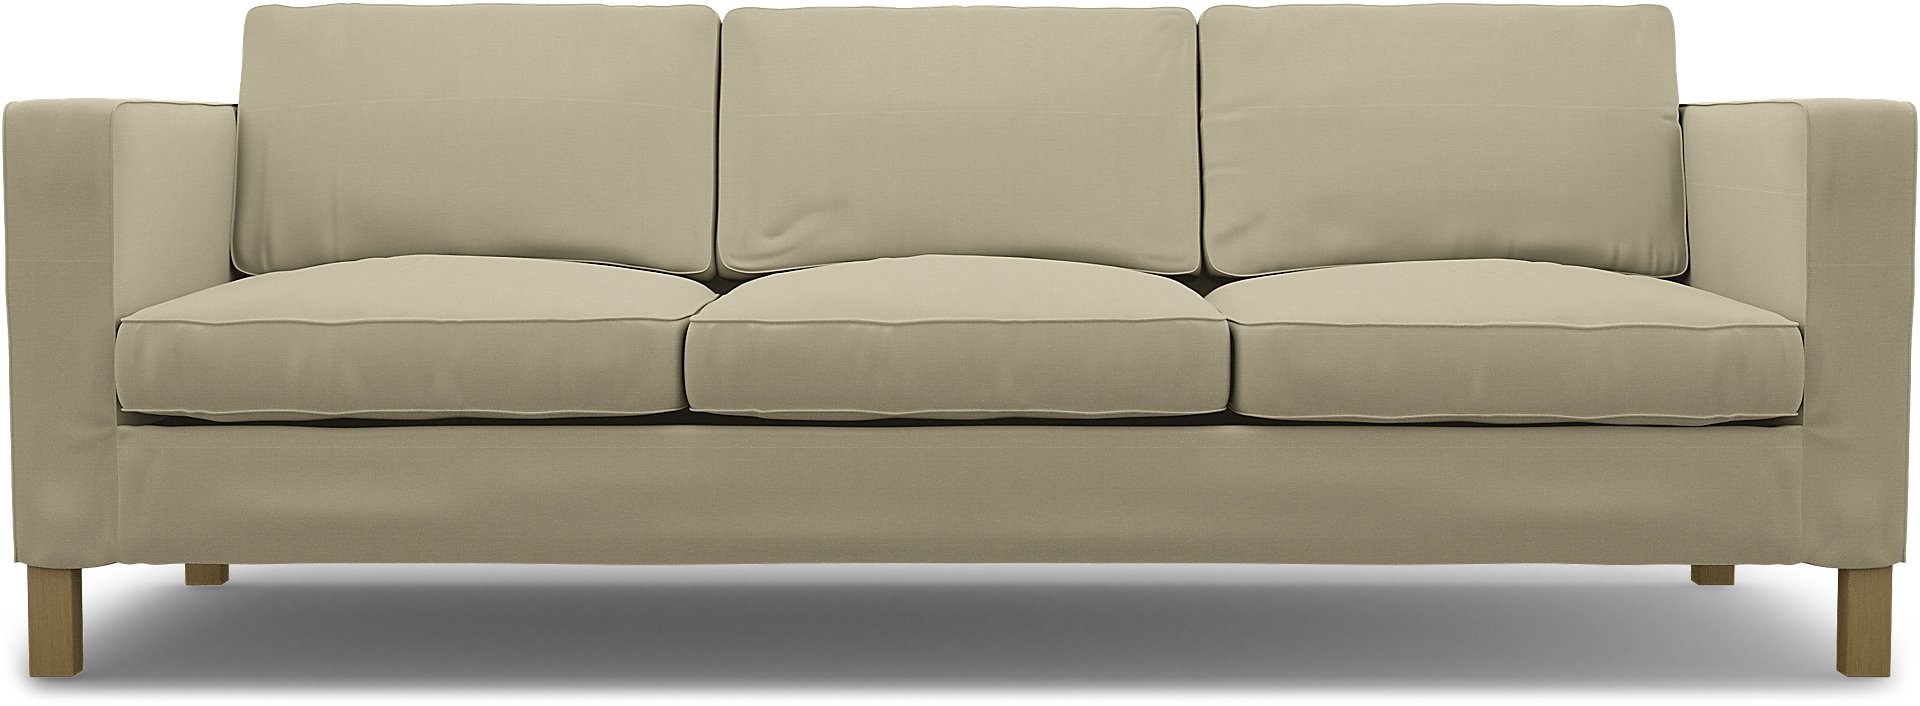 IKEA - Karlanda 3 Seater Sofa Cover, Sand Beige, Cotton - Bemz